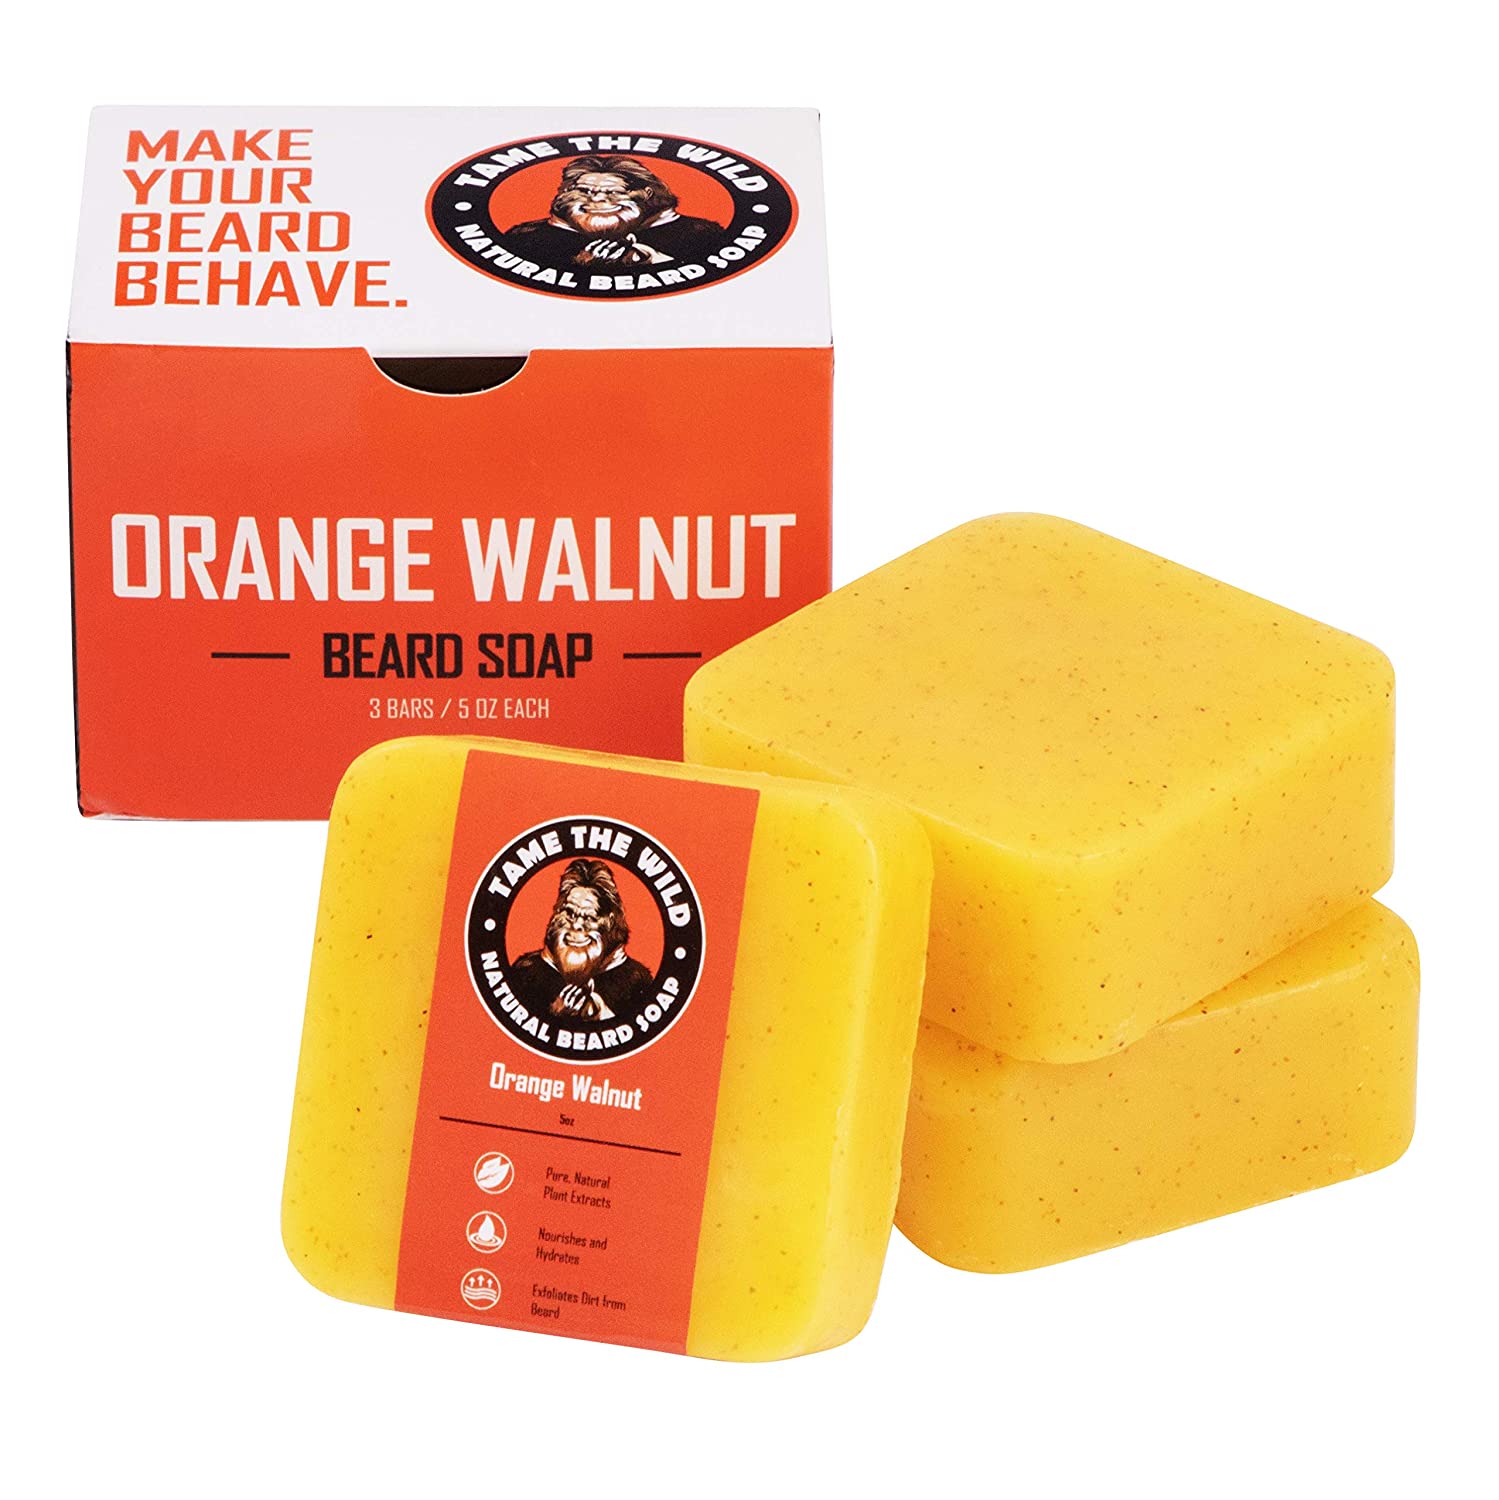 Tame the Wild Orange Walnut Beard Soap - Natural Beard Wash - Beard Shampoo & Conditioner - Exfoliating Face & Body Scrub - Made of Shea Butter & Coconut Oil - 3 Pack Set of 5oz Bars - image 1 of 7